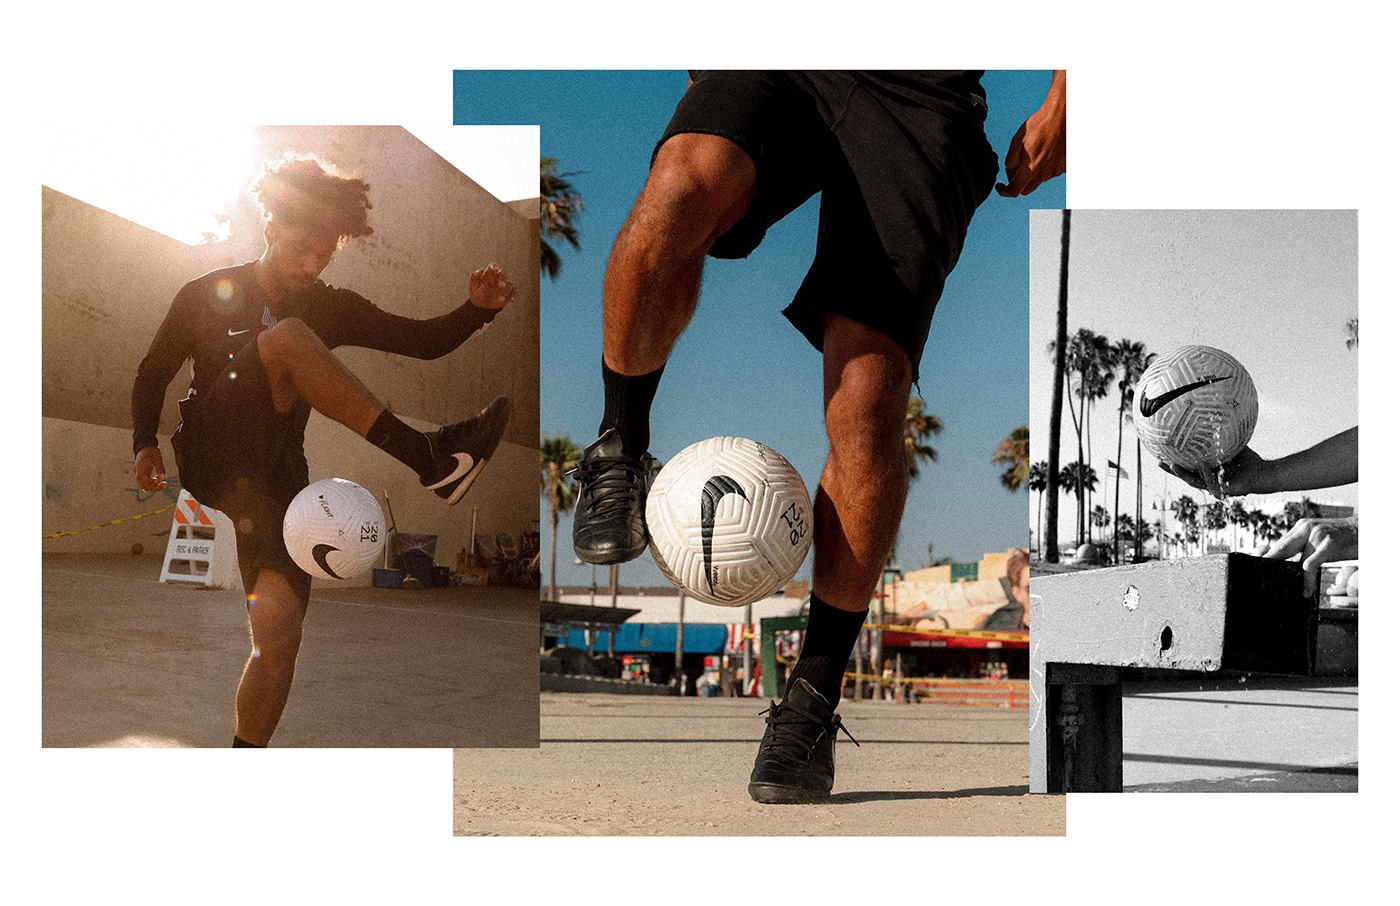 aerowsculpt ball flight football Nike soccer Technology aerodynamic design sports ball